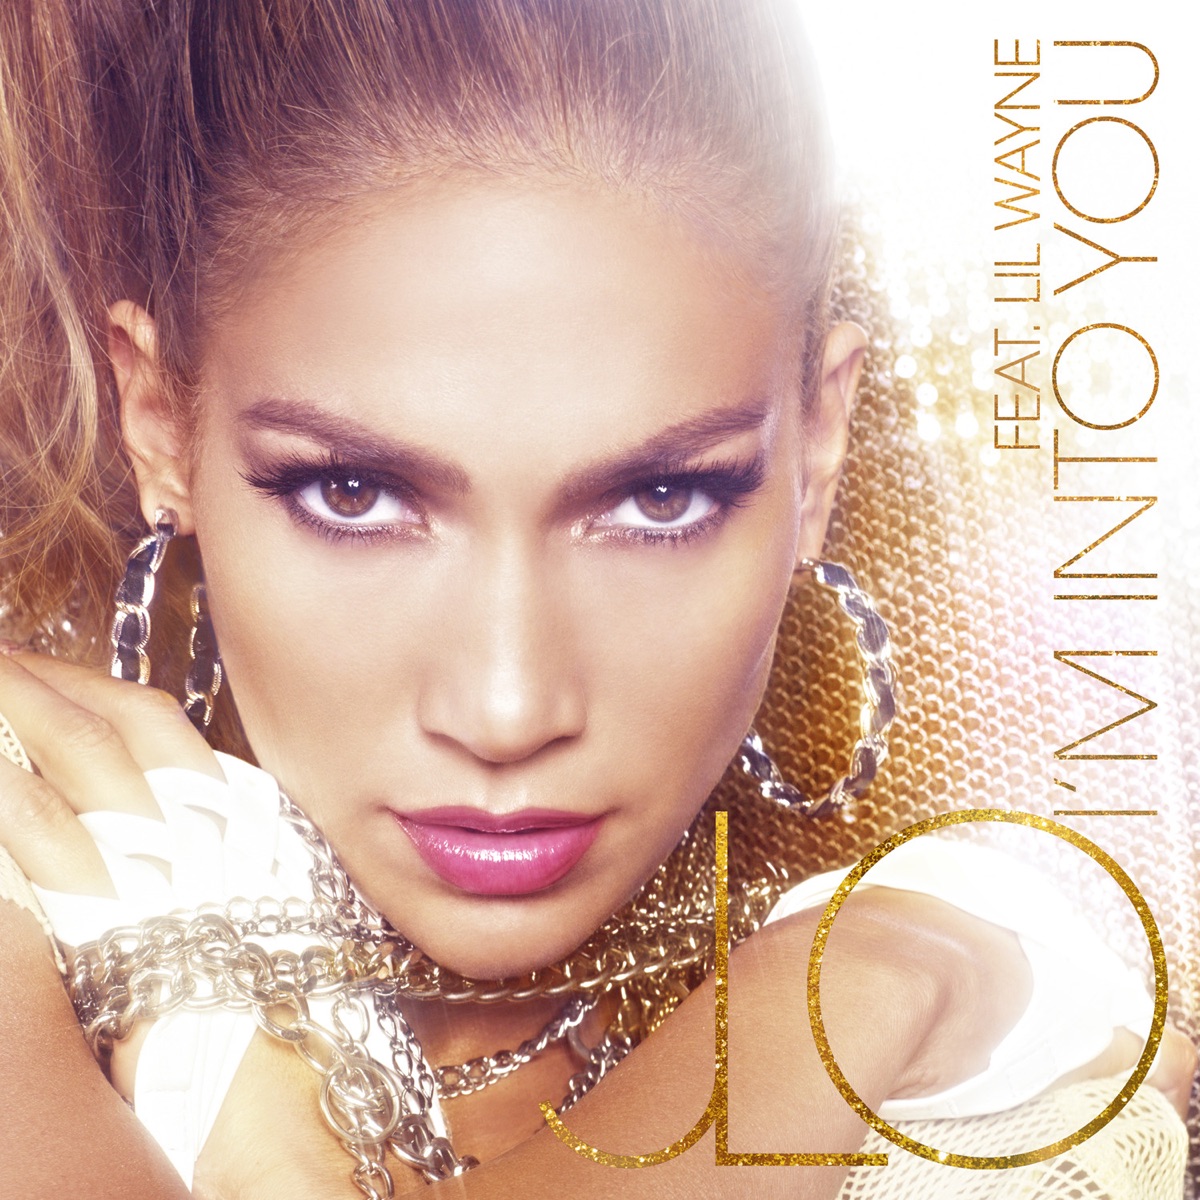 Jennifer Lopez featuring Lil Wayne — I’m Into You cover artwork